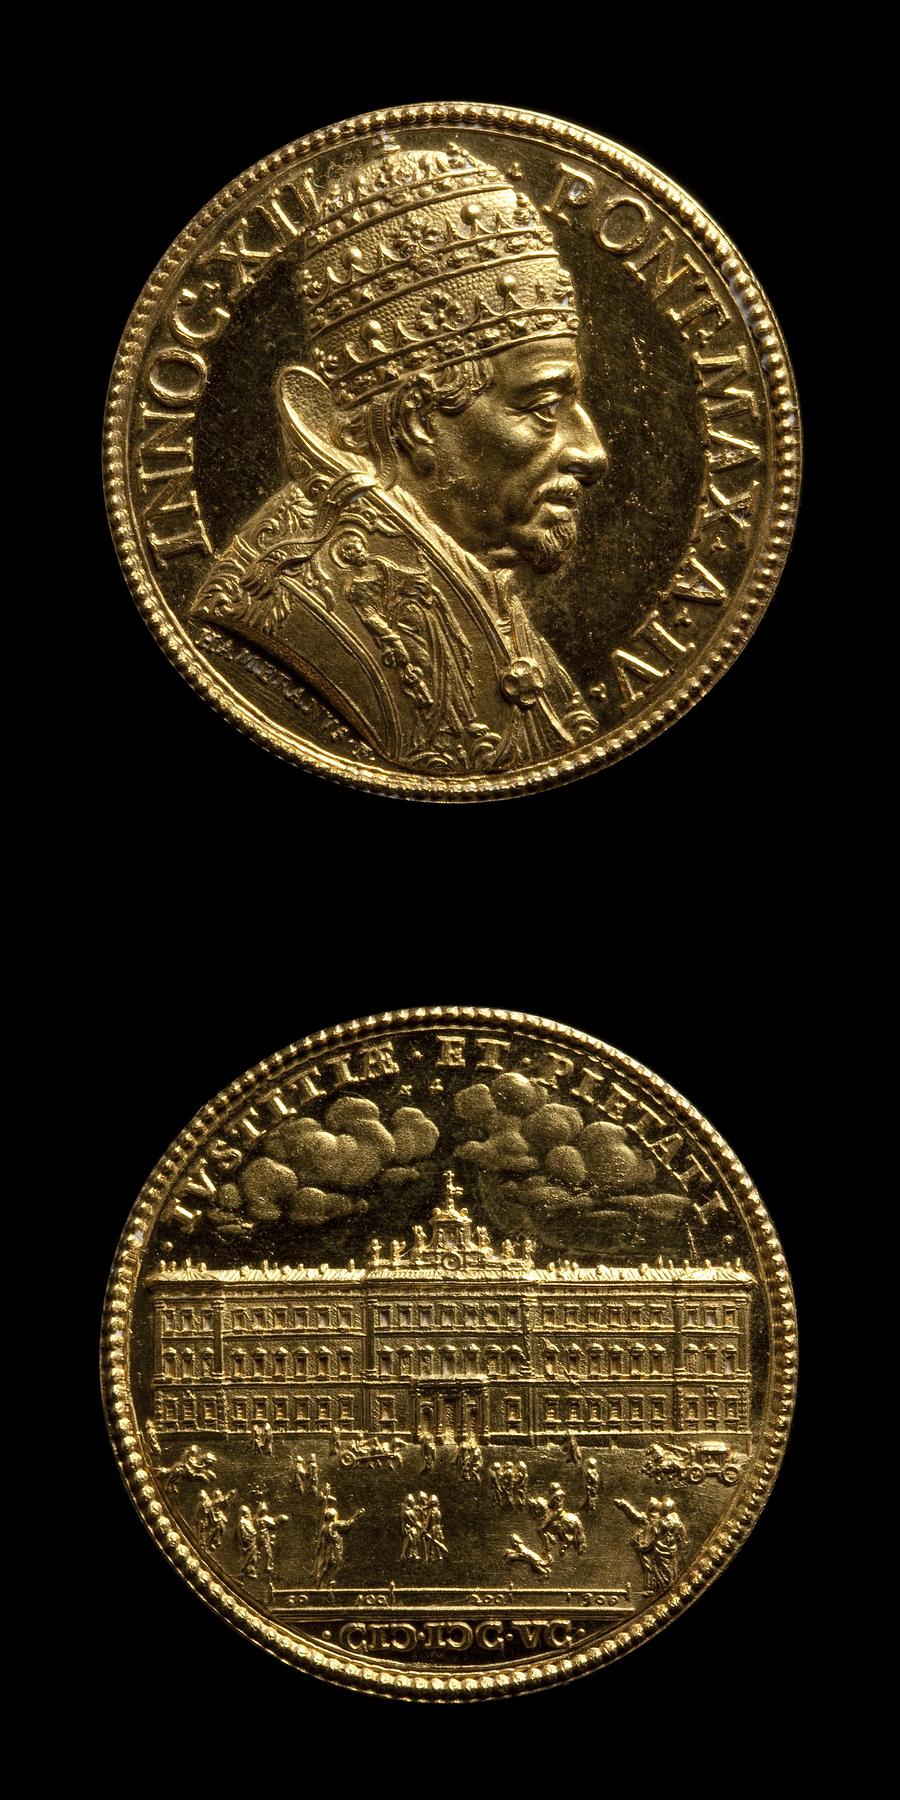 Medaljens forside: Innocent 12. Medaljens bagside: Palazzo del Monte Citorio, F27